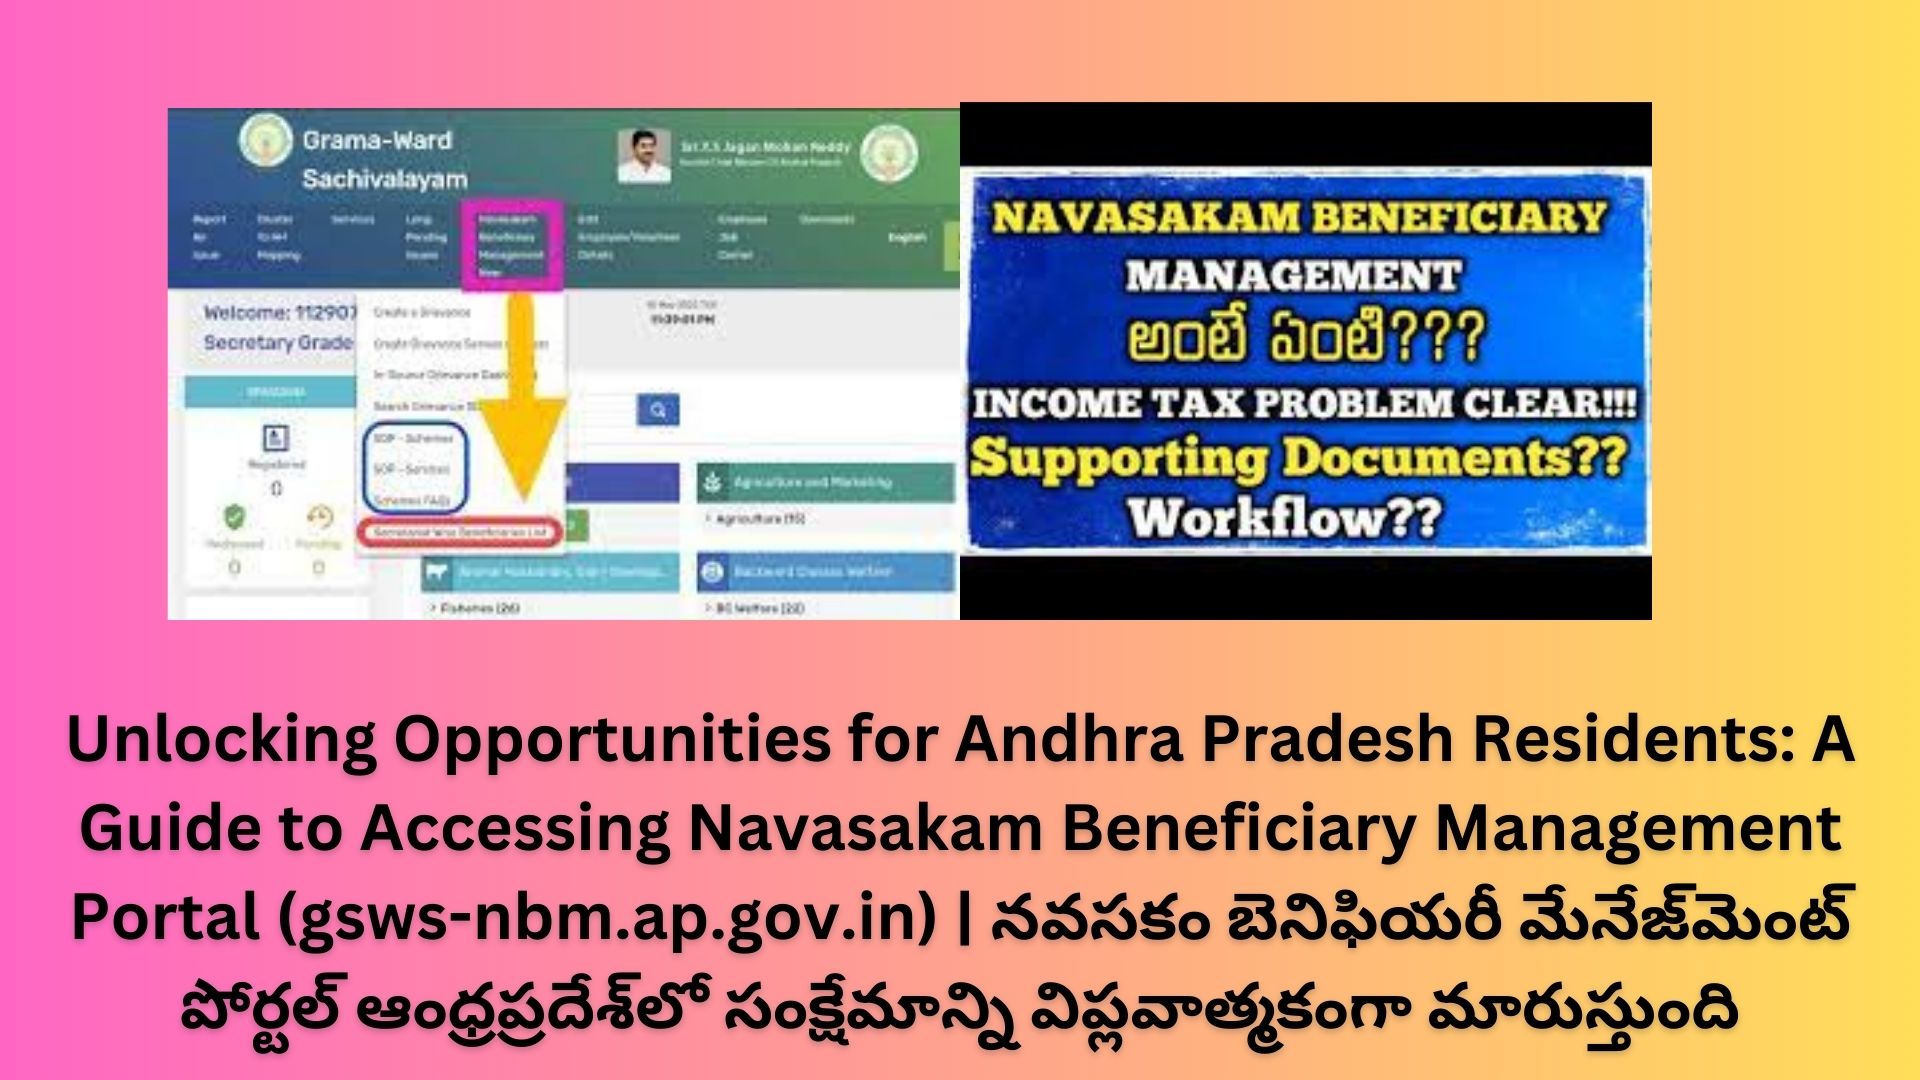 Unlocking Opportunities for Andhra Pradesh Residents: A Guide to Accessing Navasakam Beneficiary Management Portal (gsws-nbm.ap.gov.in) | నవసకం బెనిఫియరీ మేనేజ్‌మెంట్ పోర్టల్ ఆంధ్రప్రదేశ్‌లో సంక్షేమాన్ని విప్లవాత్మకంగా మారుస్తుంది